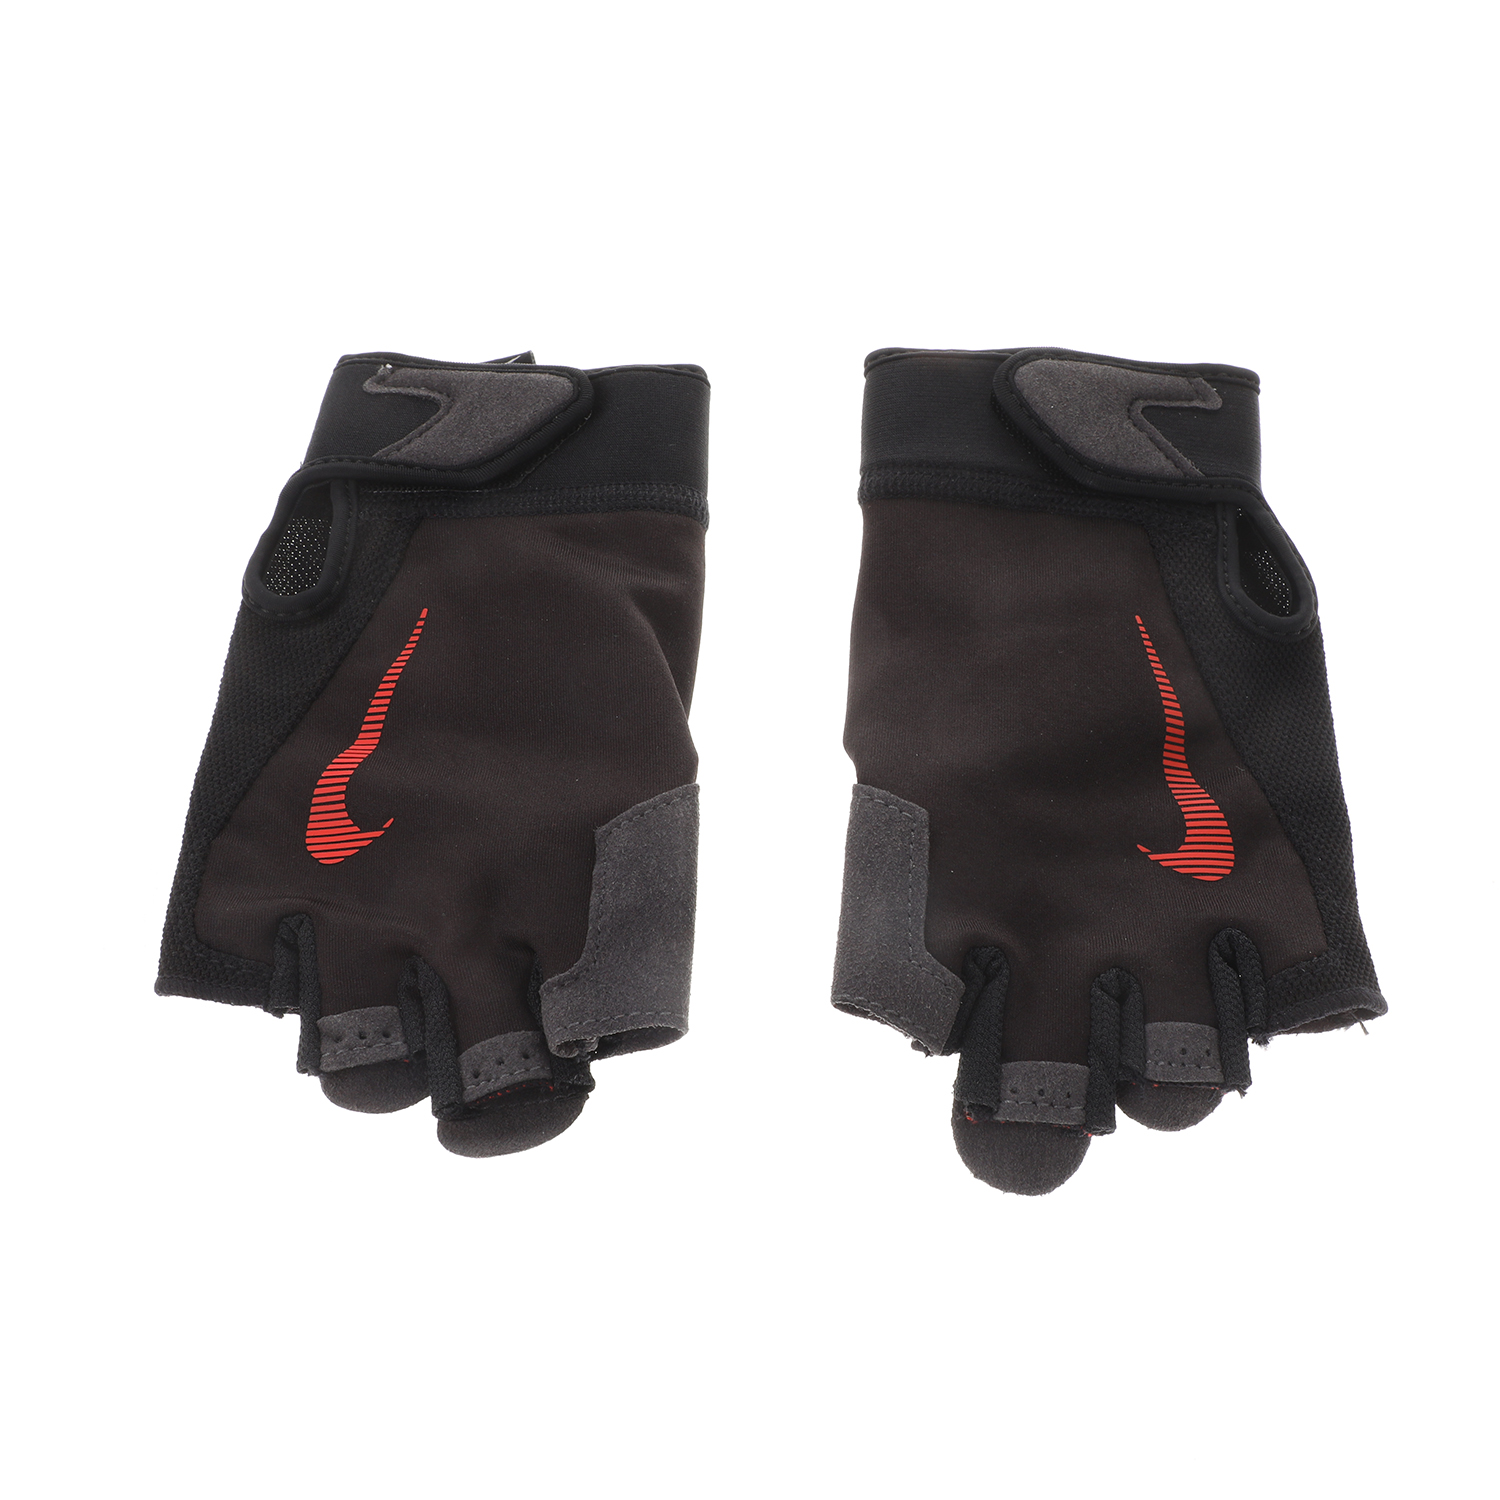 NIKE - Ανδρικά γάντια προπόνησης NIKE N.LG.C2.LG ULTIMATE FITNESS μαύρα Ανδρικά/Αξεσουάρ/Αθλητικά Είδη/Εξοπλισμός